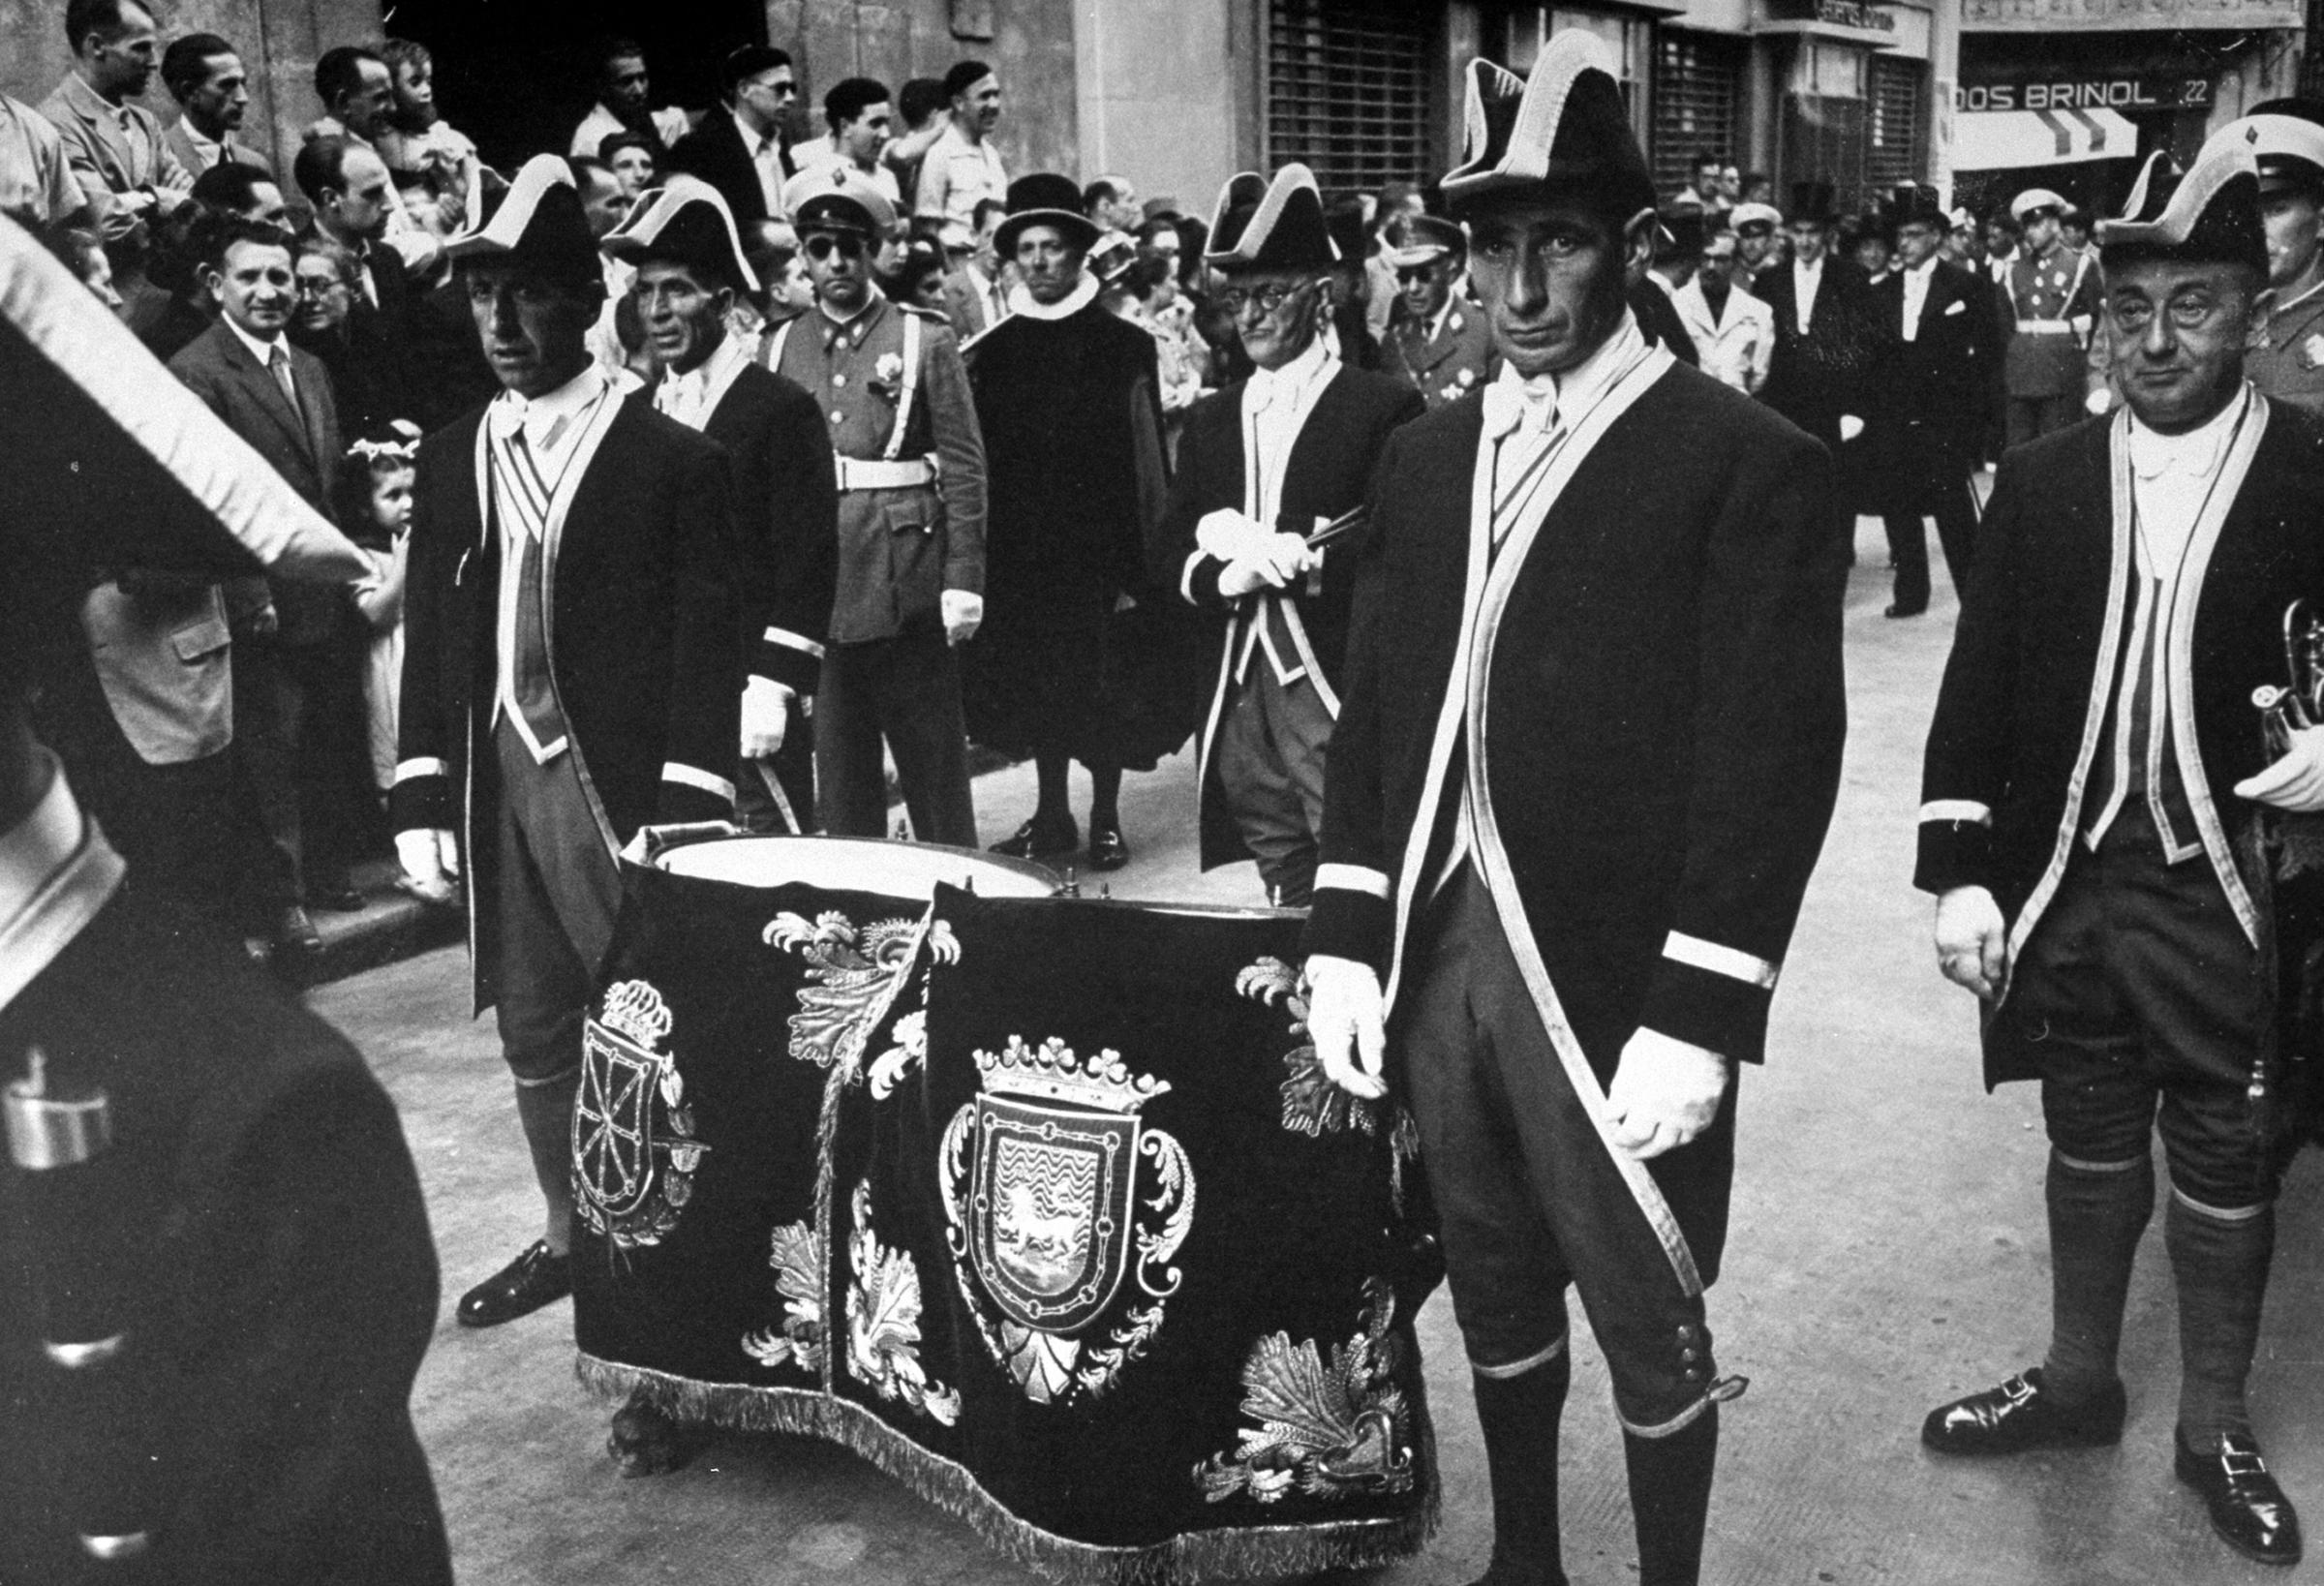 The festival of San Fermín in Pamplona, Spain, 1947.